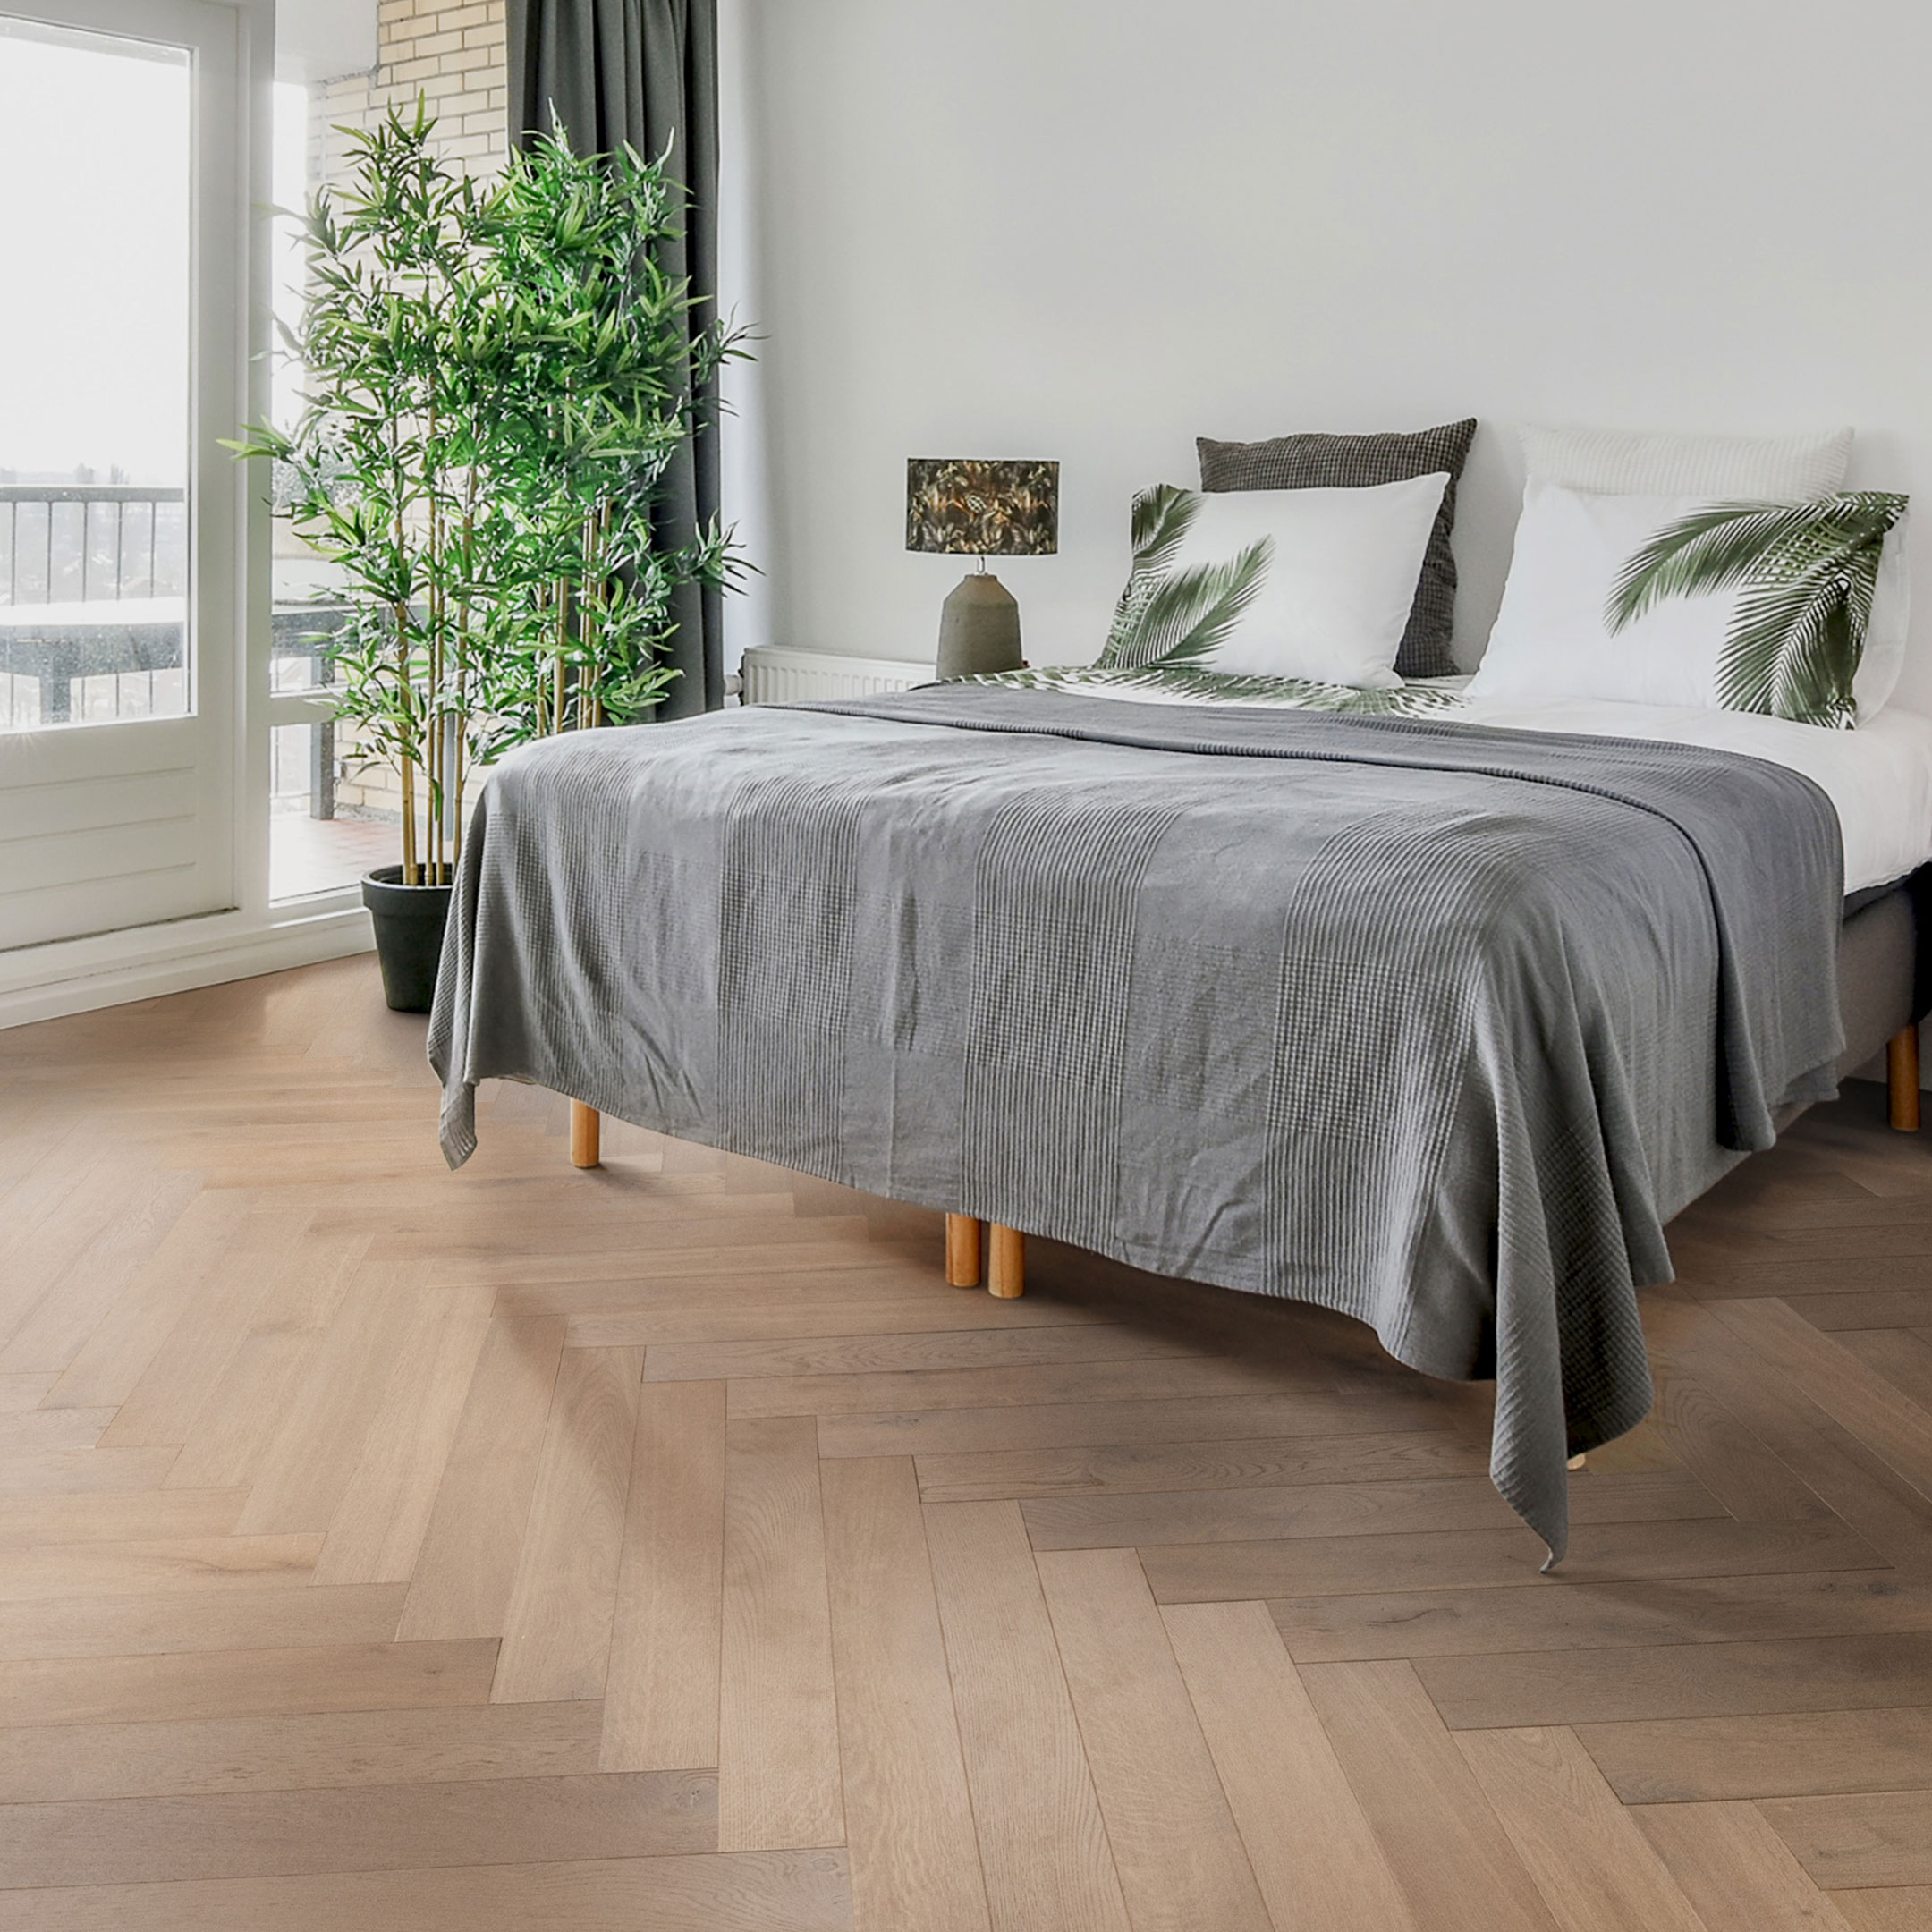 Room scene showcasing Urban Floor's Timbertop hardwood flooring, featuring its natural beauty and elegant design in a spacious interior setting.